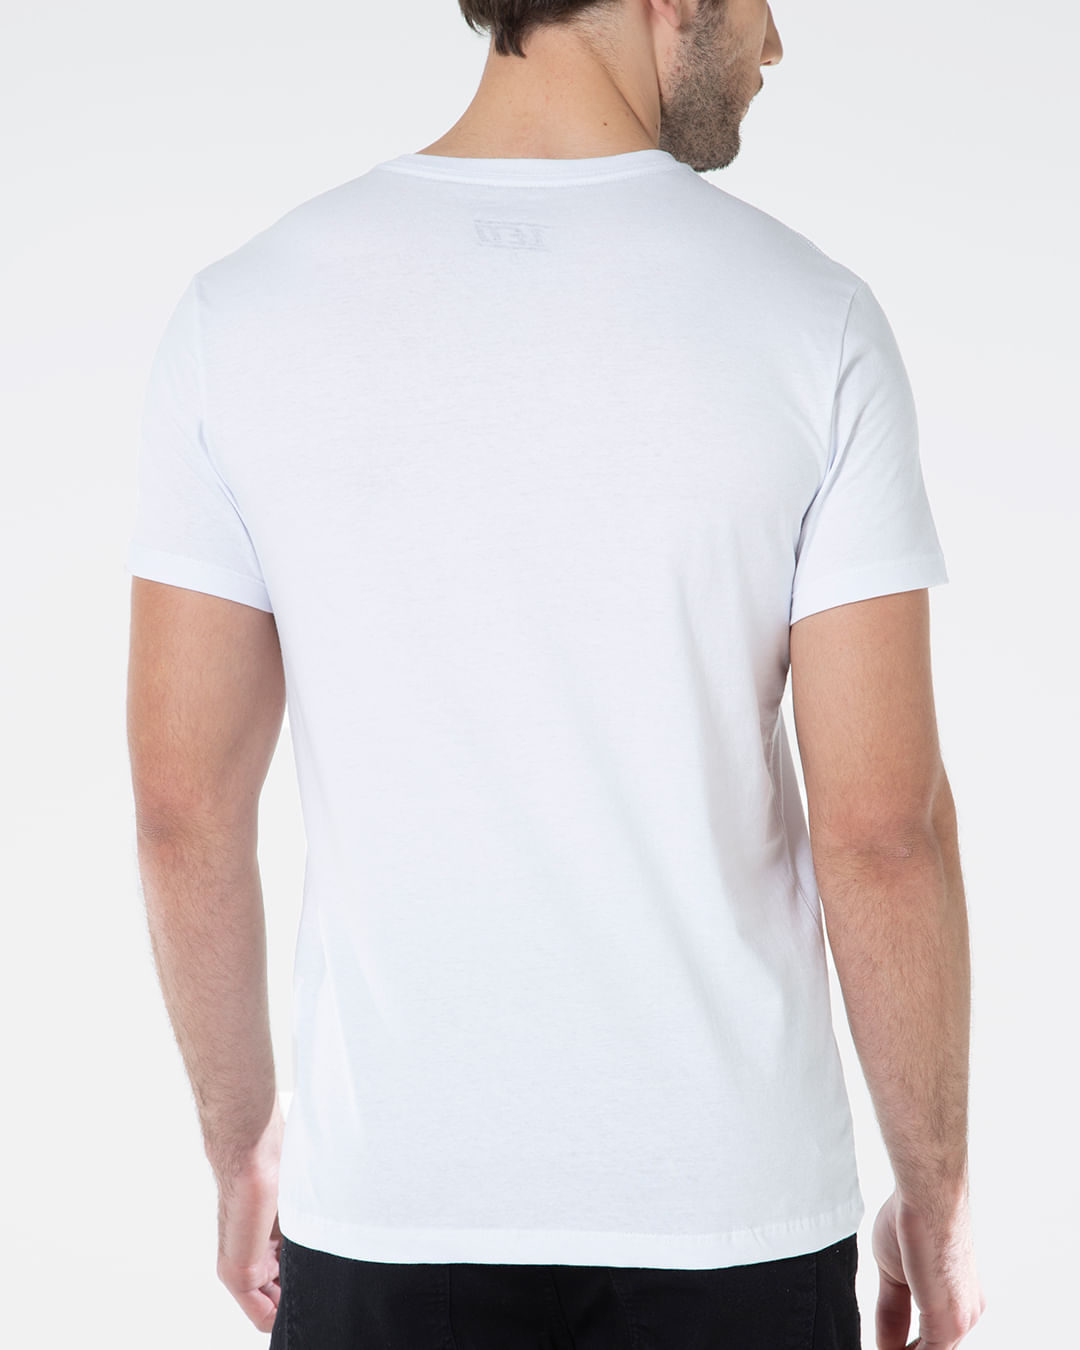 Camiseta-Masculina-Manga-Curta-Cangaceiros-Branca